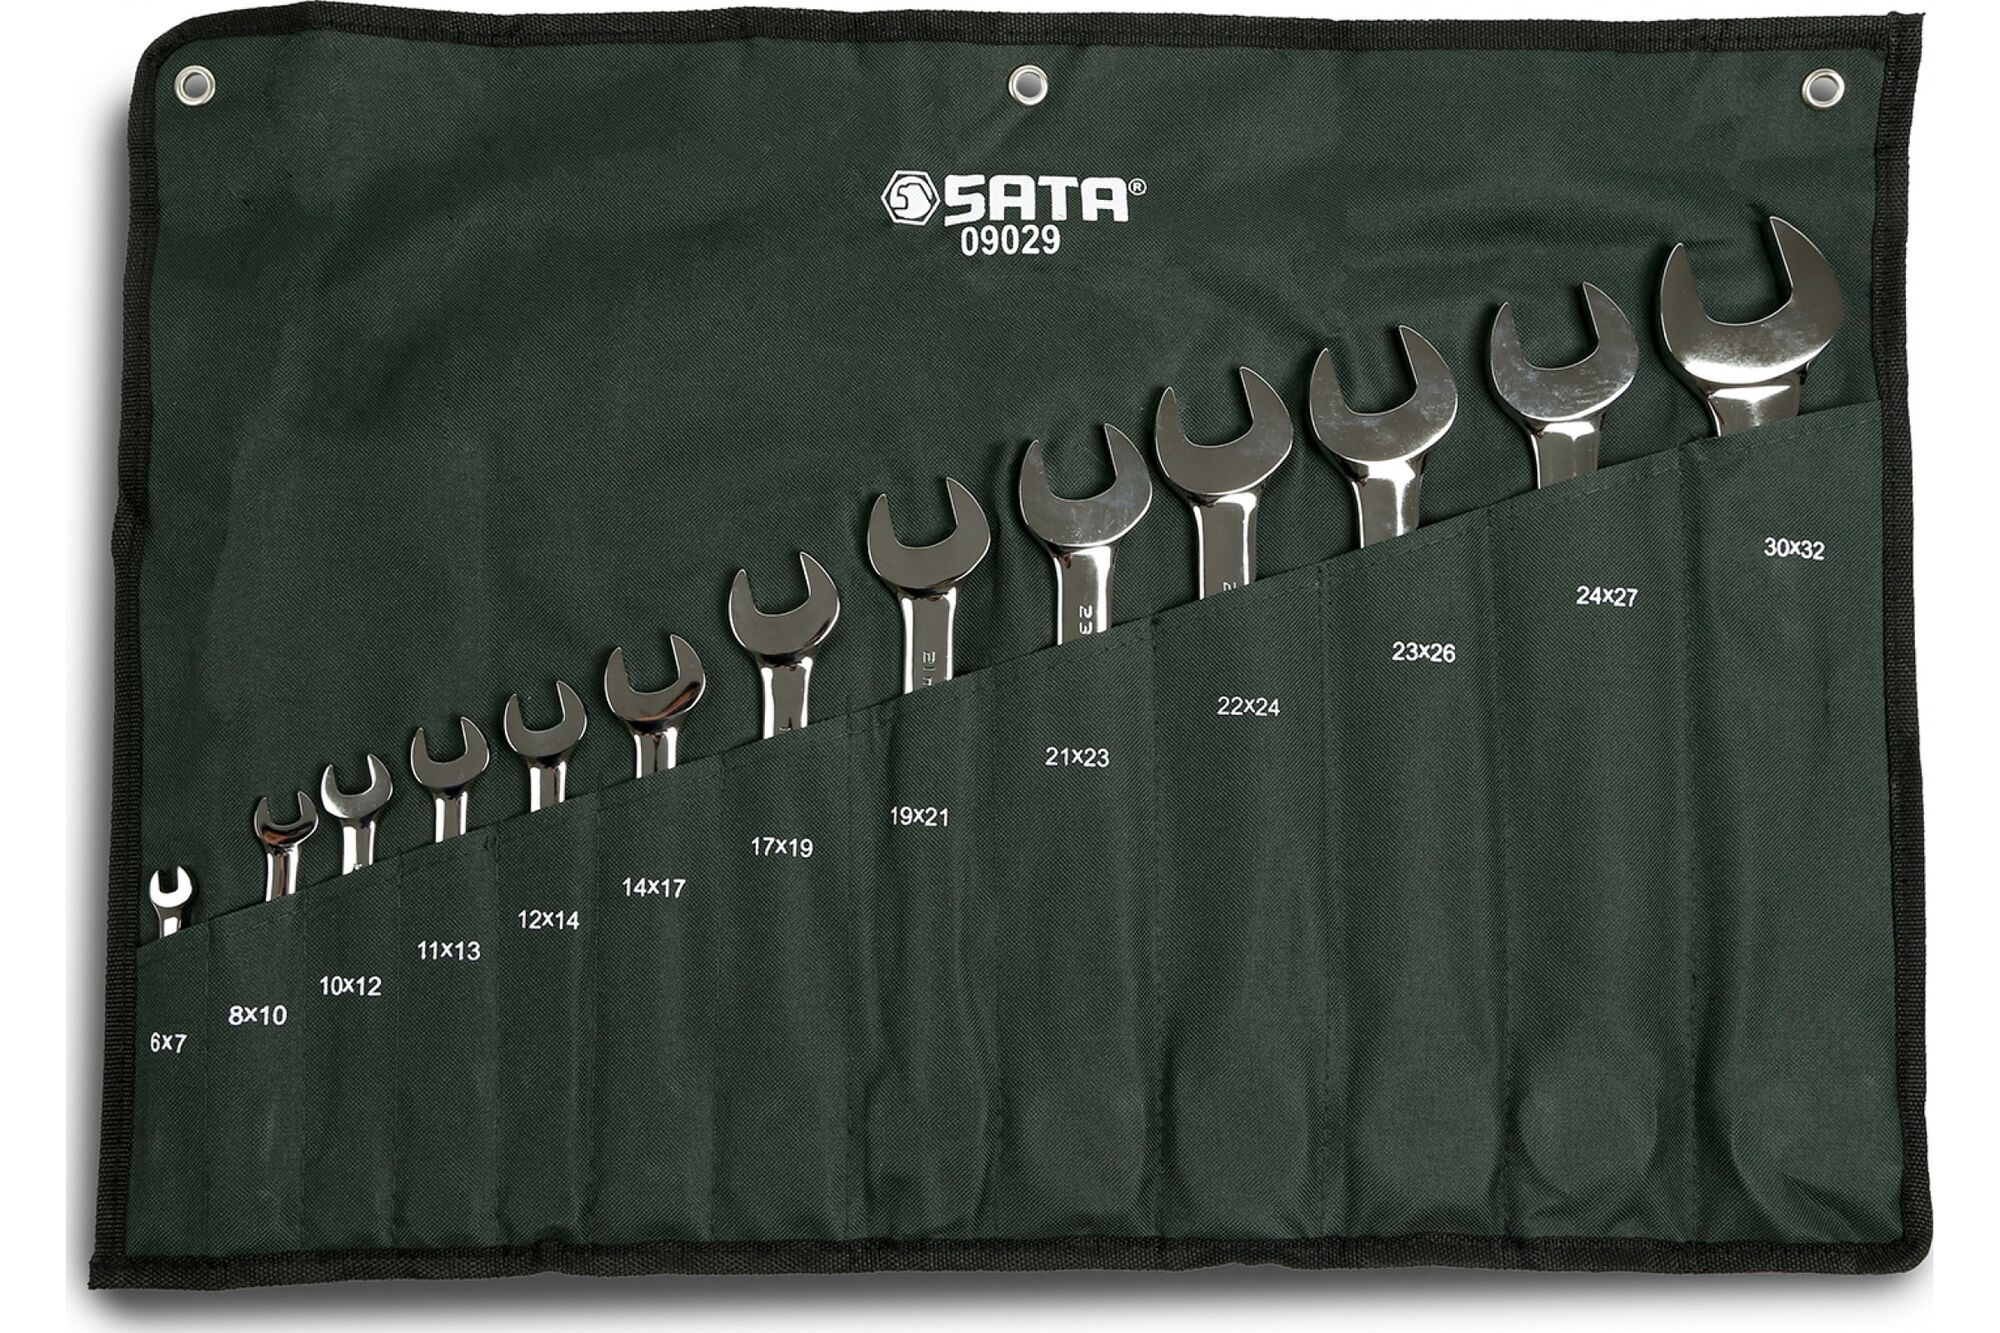 Набор рожковых ключей SATA CR-V 13пр 6-32мм чехол (сумка)